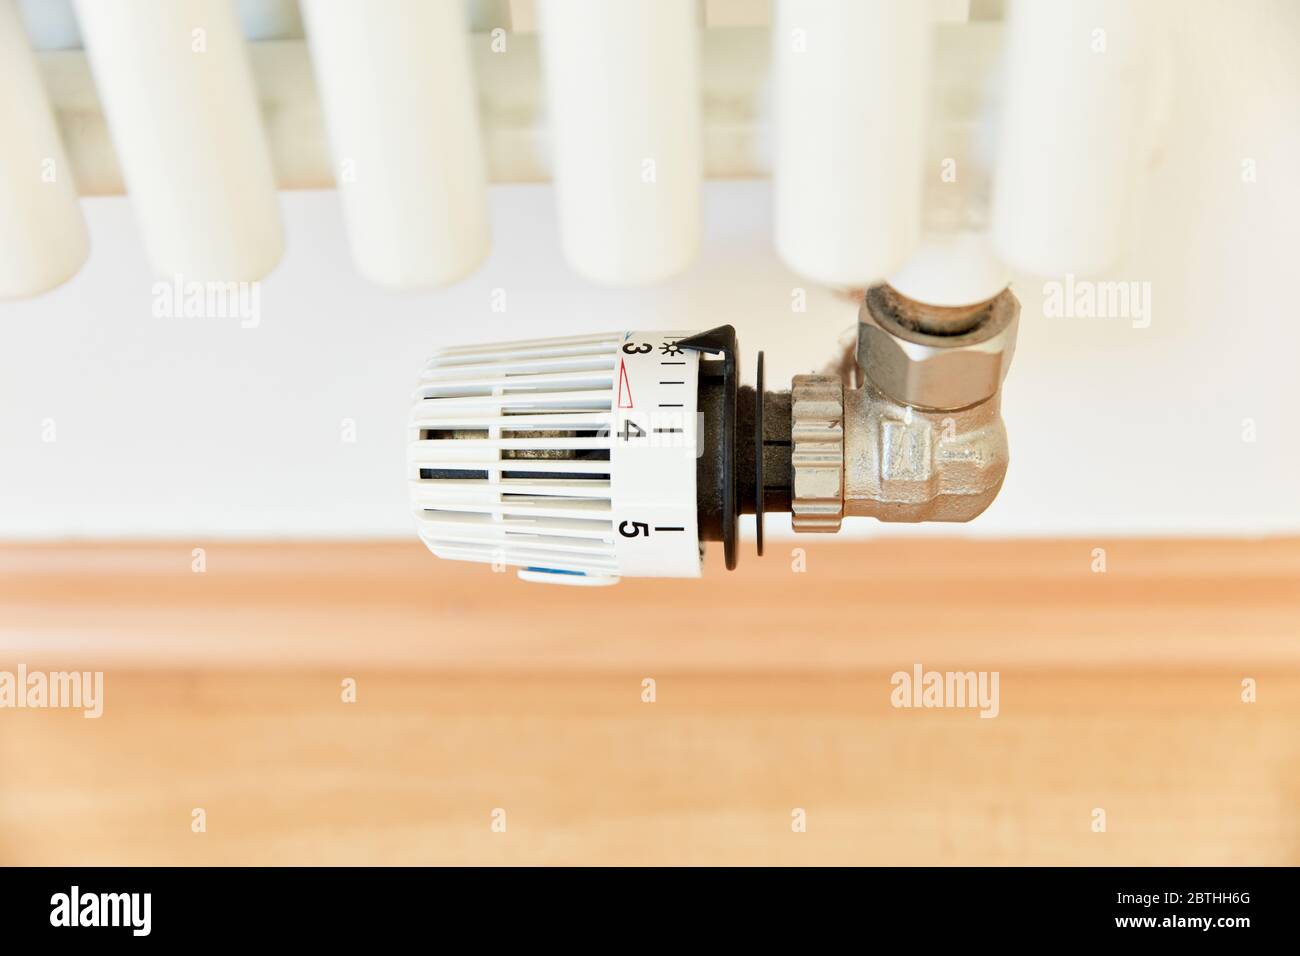 Temperature regulator on three on radiators of a heater on wall Stock Photo